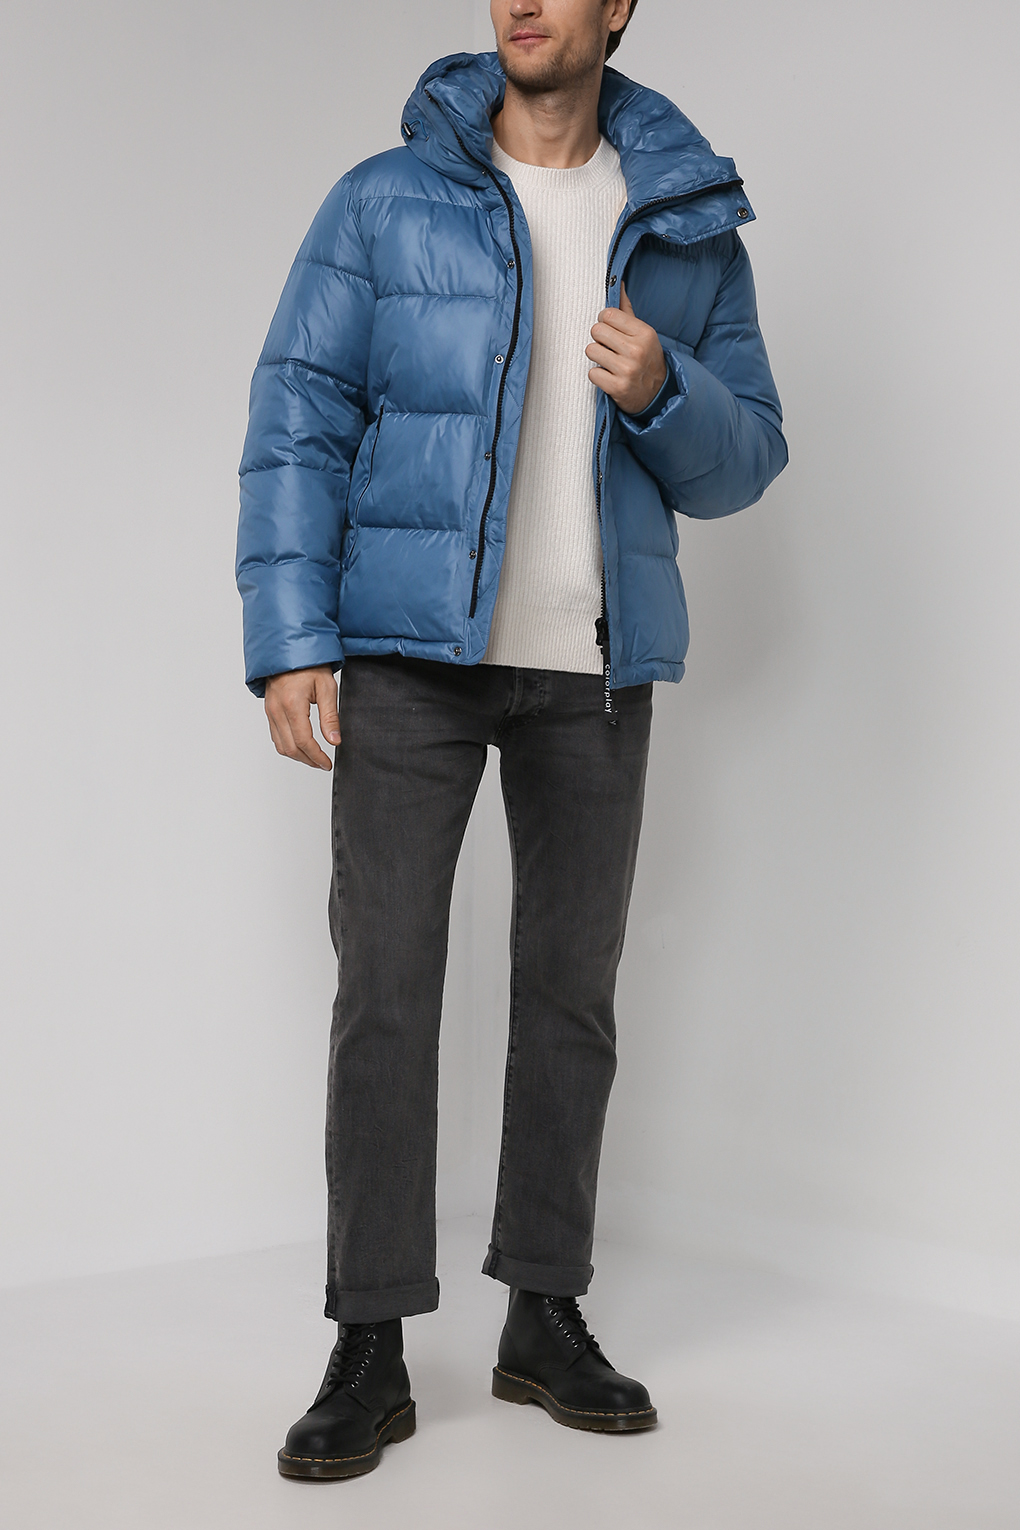 Куртка мужская COLORPLAY CP21089158-005/ синяя XL